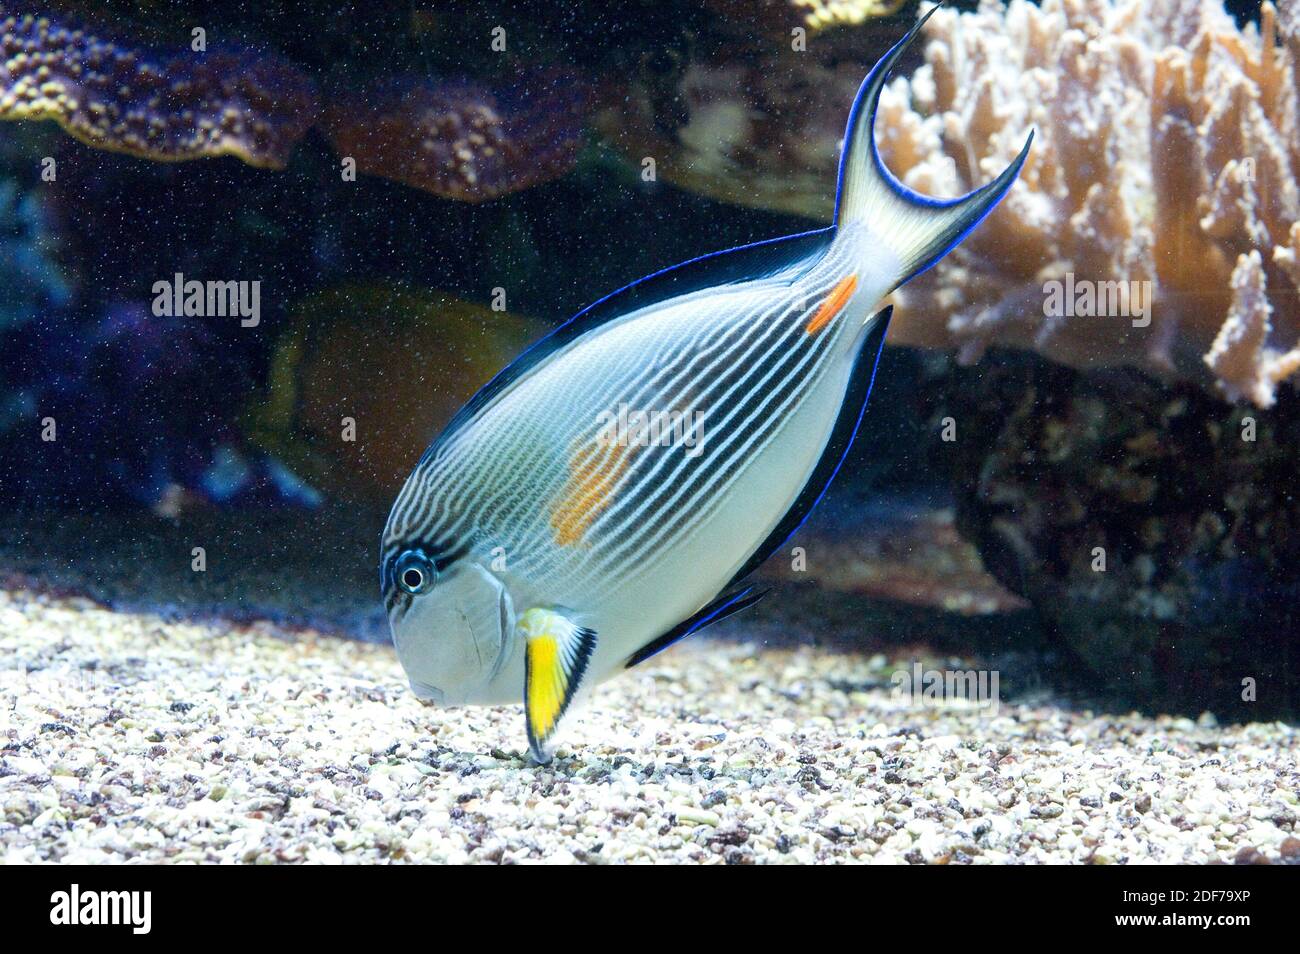 El pez surgeonfish de Sohal (Acanthurus sohal) es un pez tropical endémico del Mar Rojo. Foto de stock